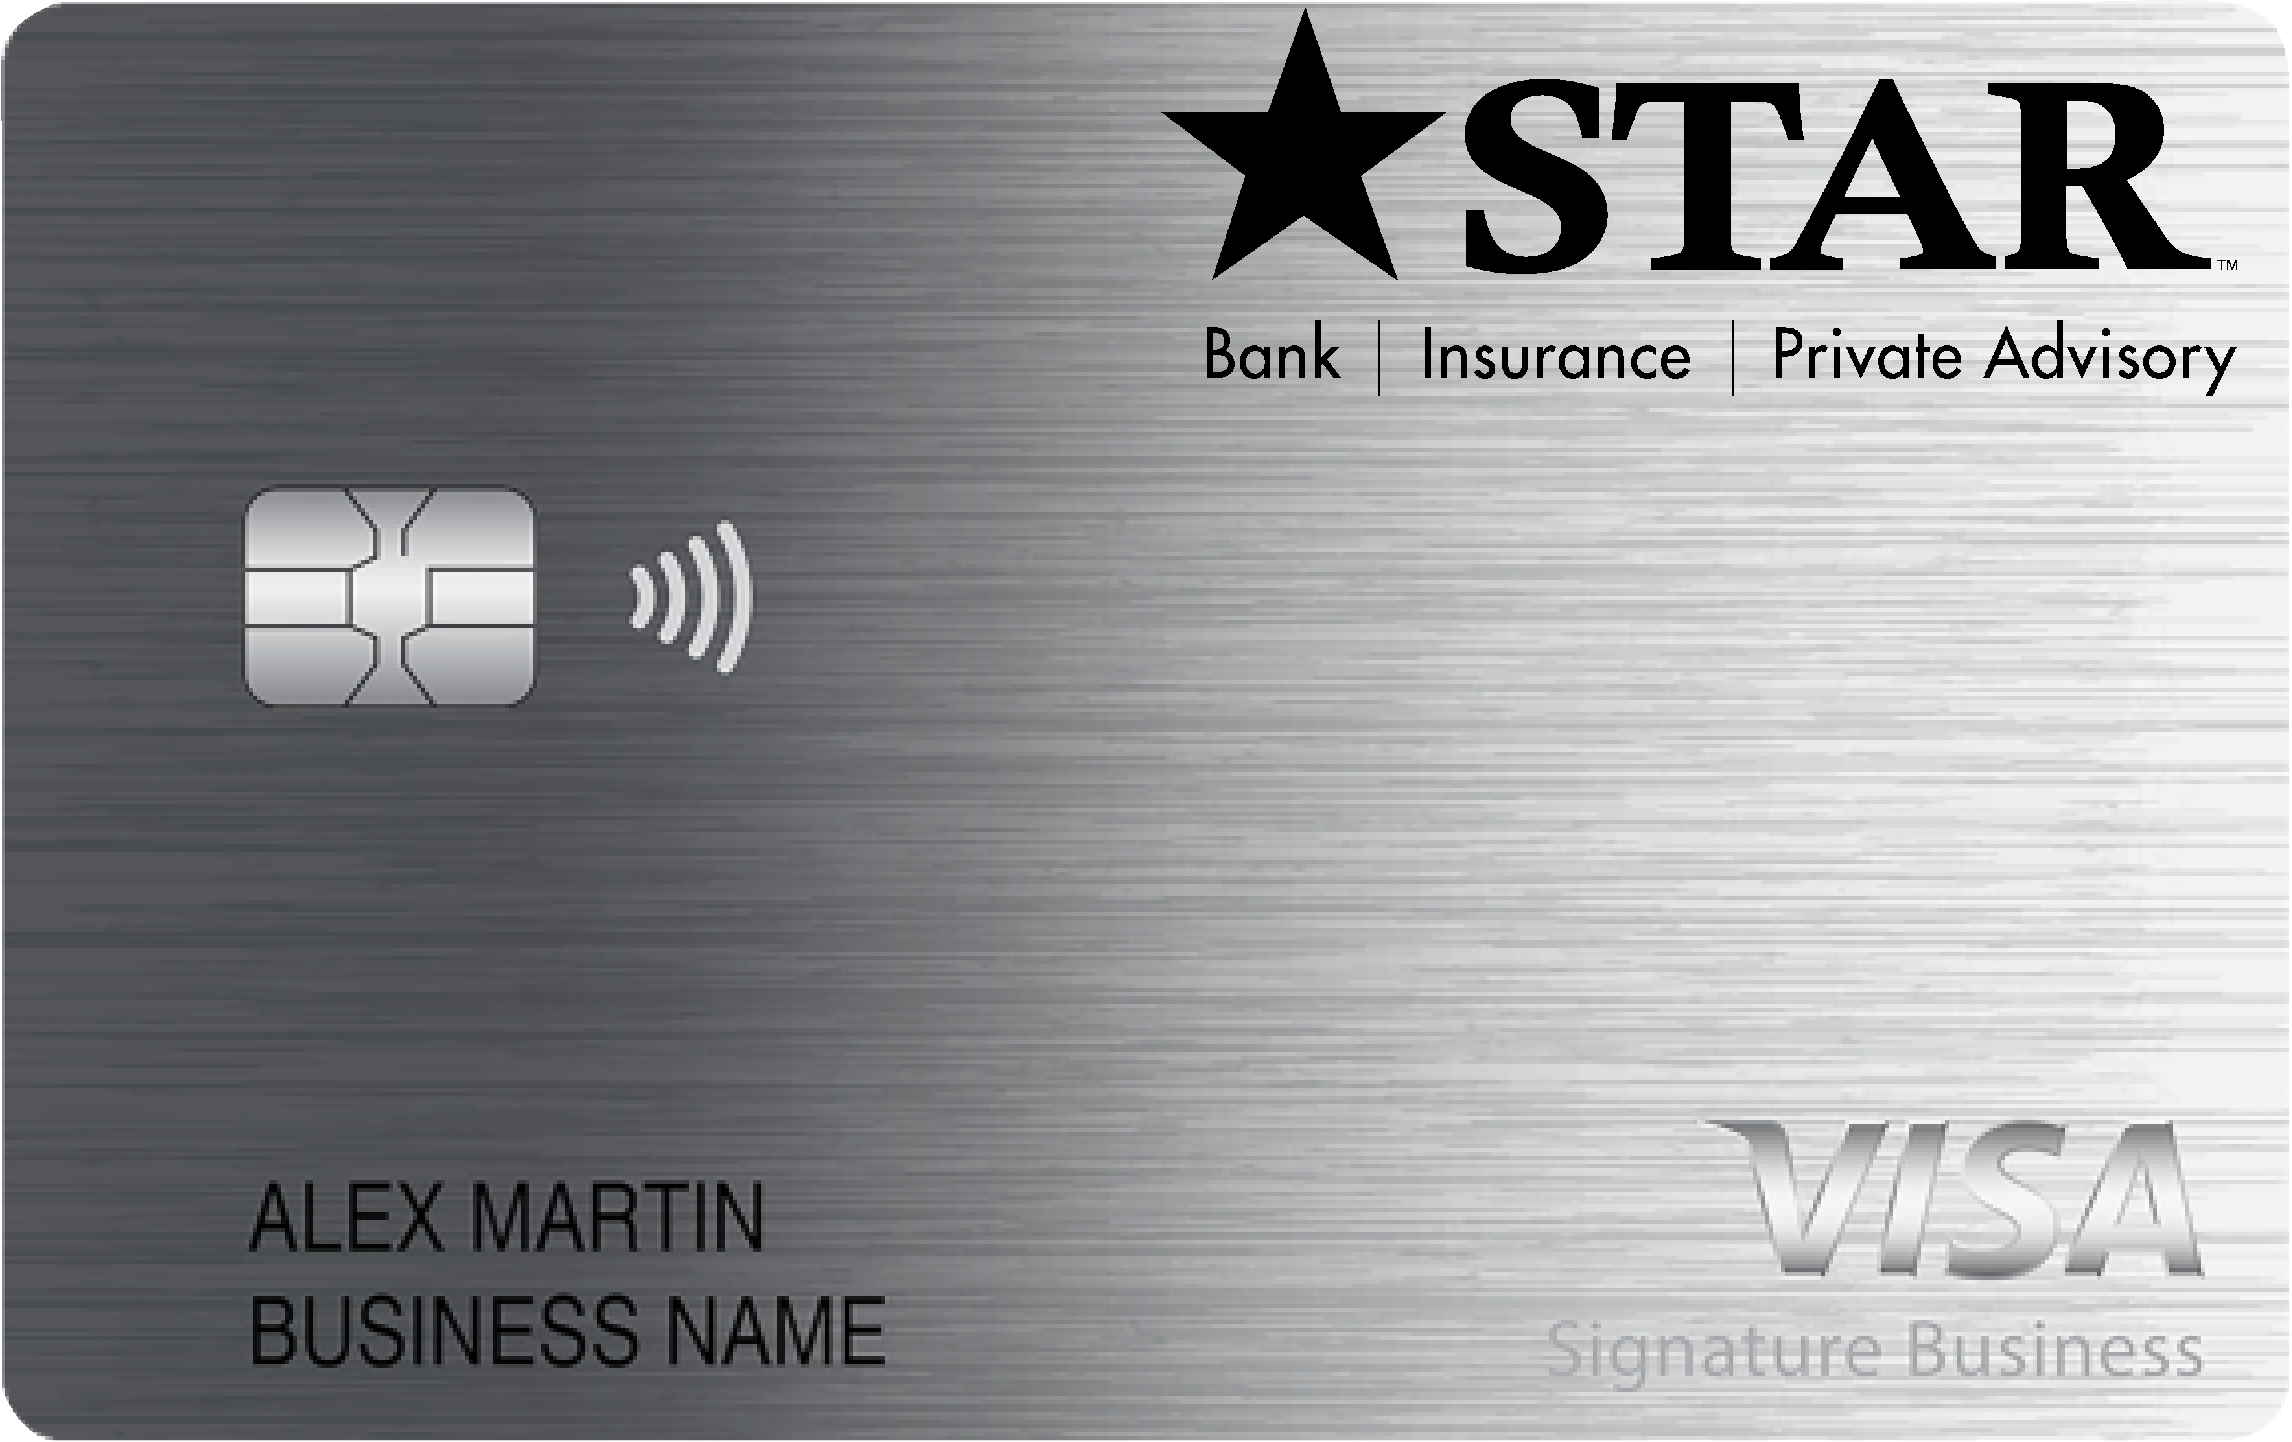 STAR Bank